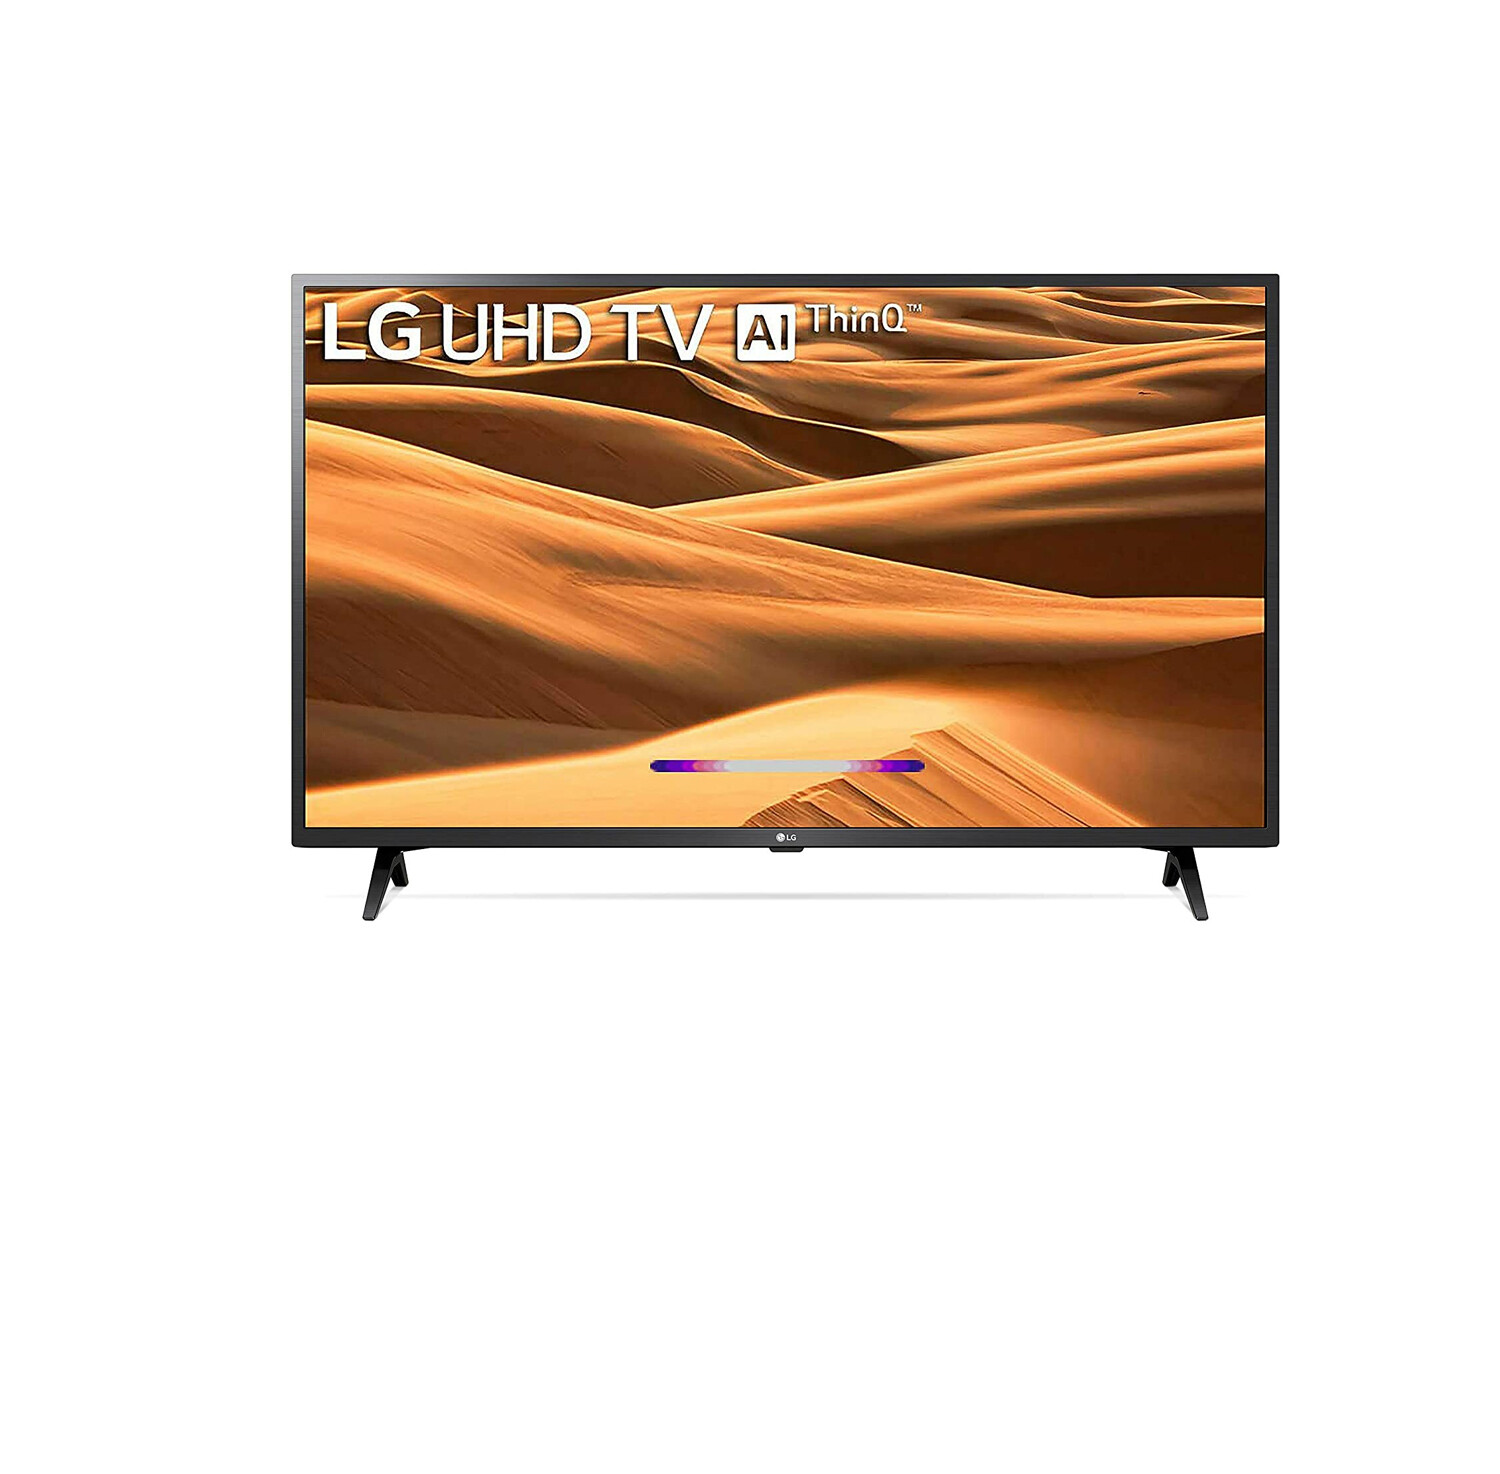 LG 108 cms (43 inches) 4K Ultra HD Smart LED TV 43UM7300PTA | with Built-in Alexa (PCM Black) (2019 Model)